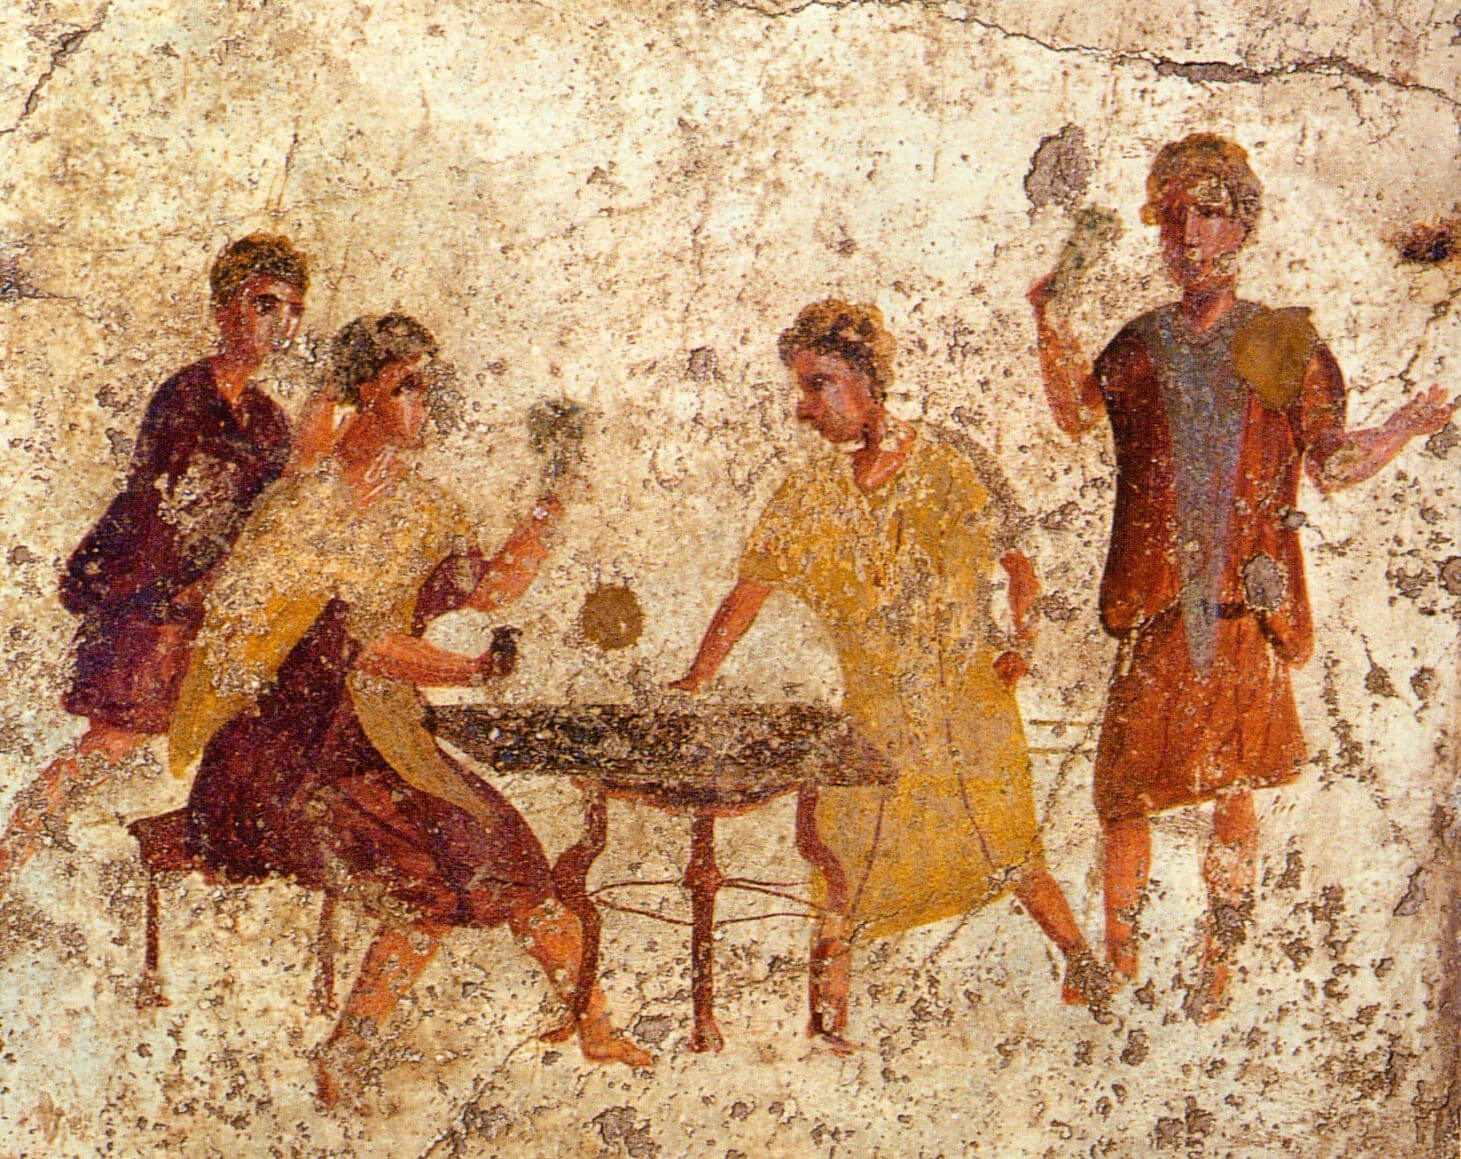 Dice players in Pompeii